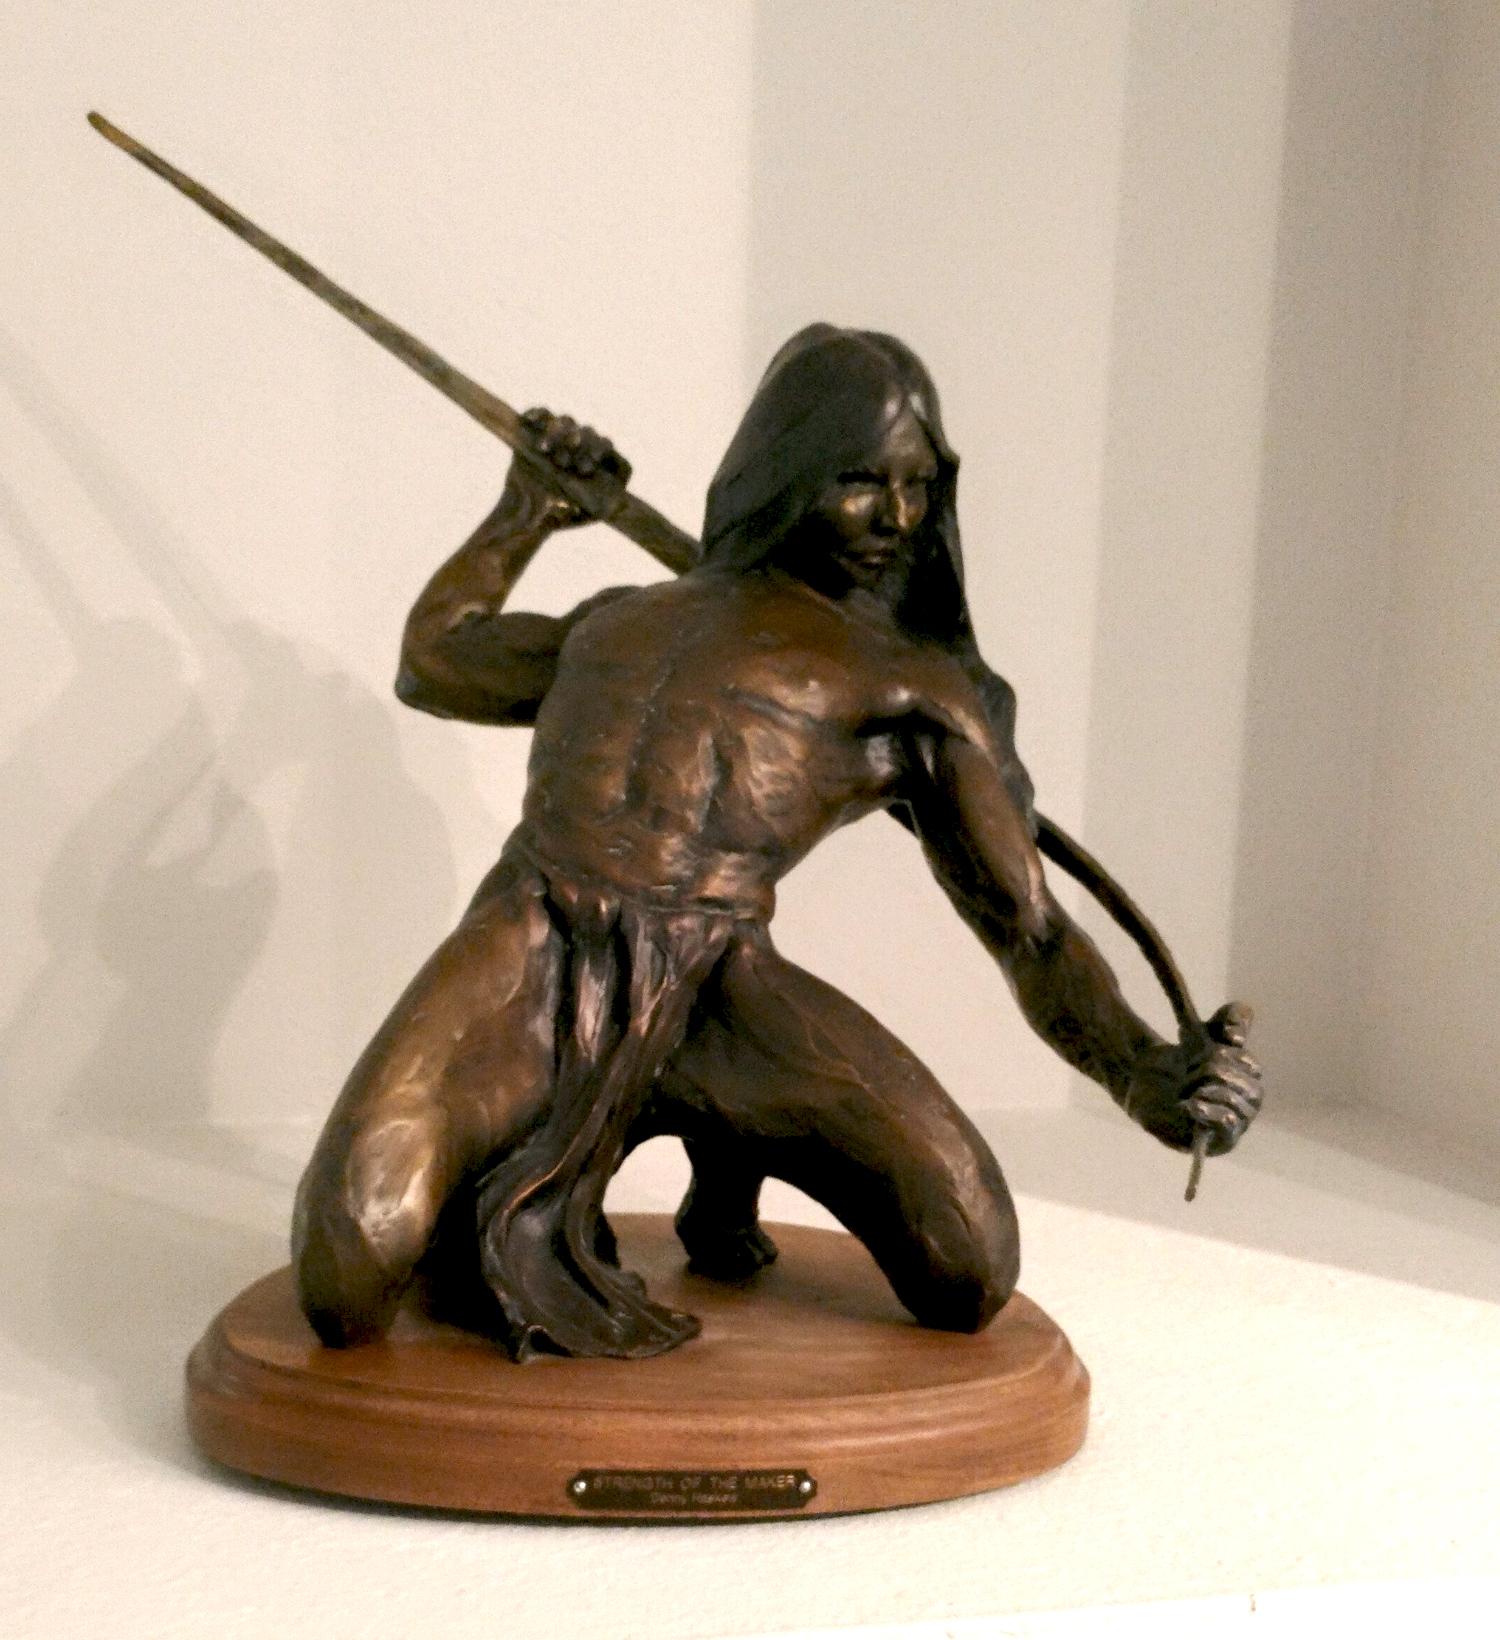 Denny Haskew Figurative Sculpture - Strength of the Maker maquette 21" high bronze